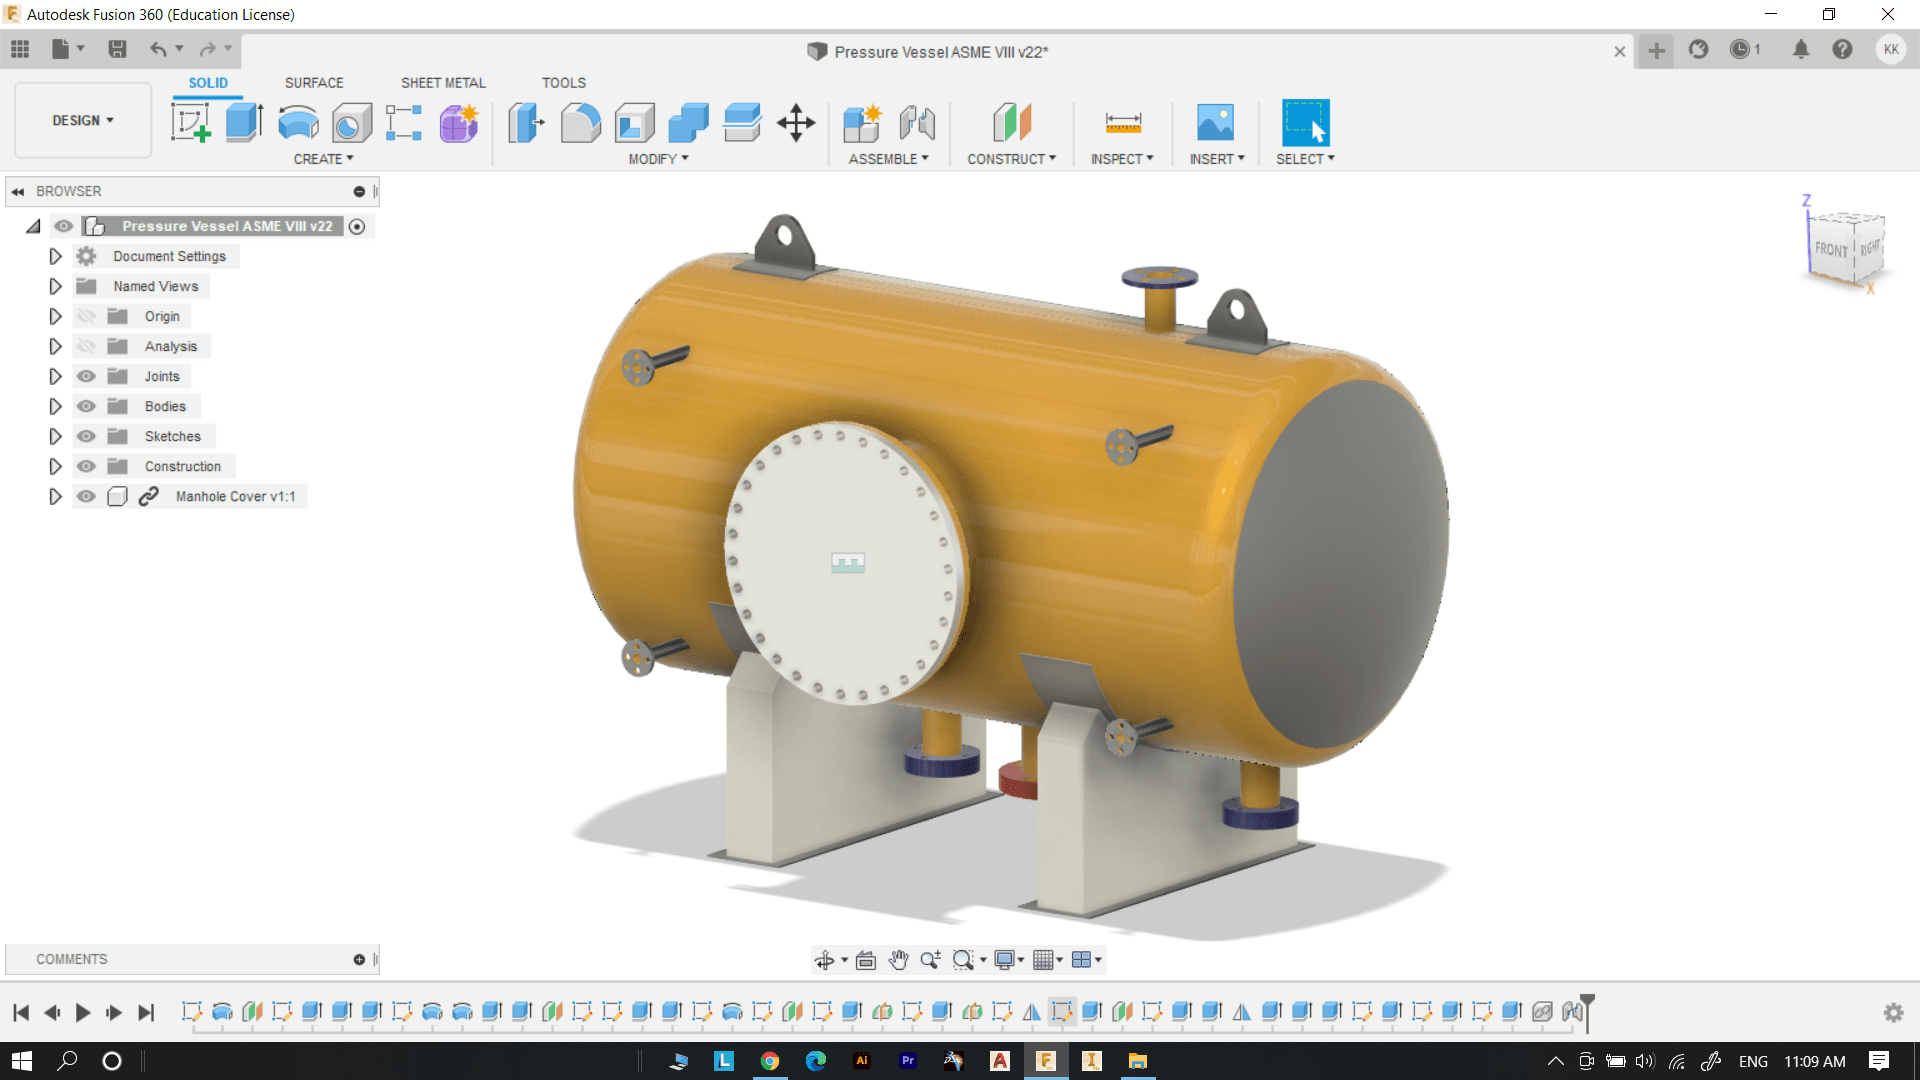 Pressure Vessel ASME VIII - Fusion360 Design view - 3d model